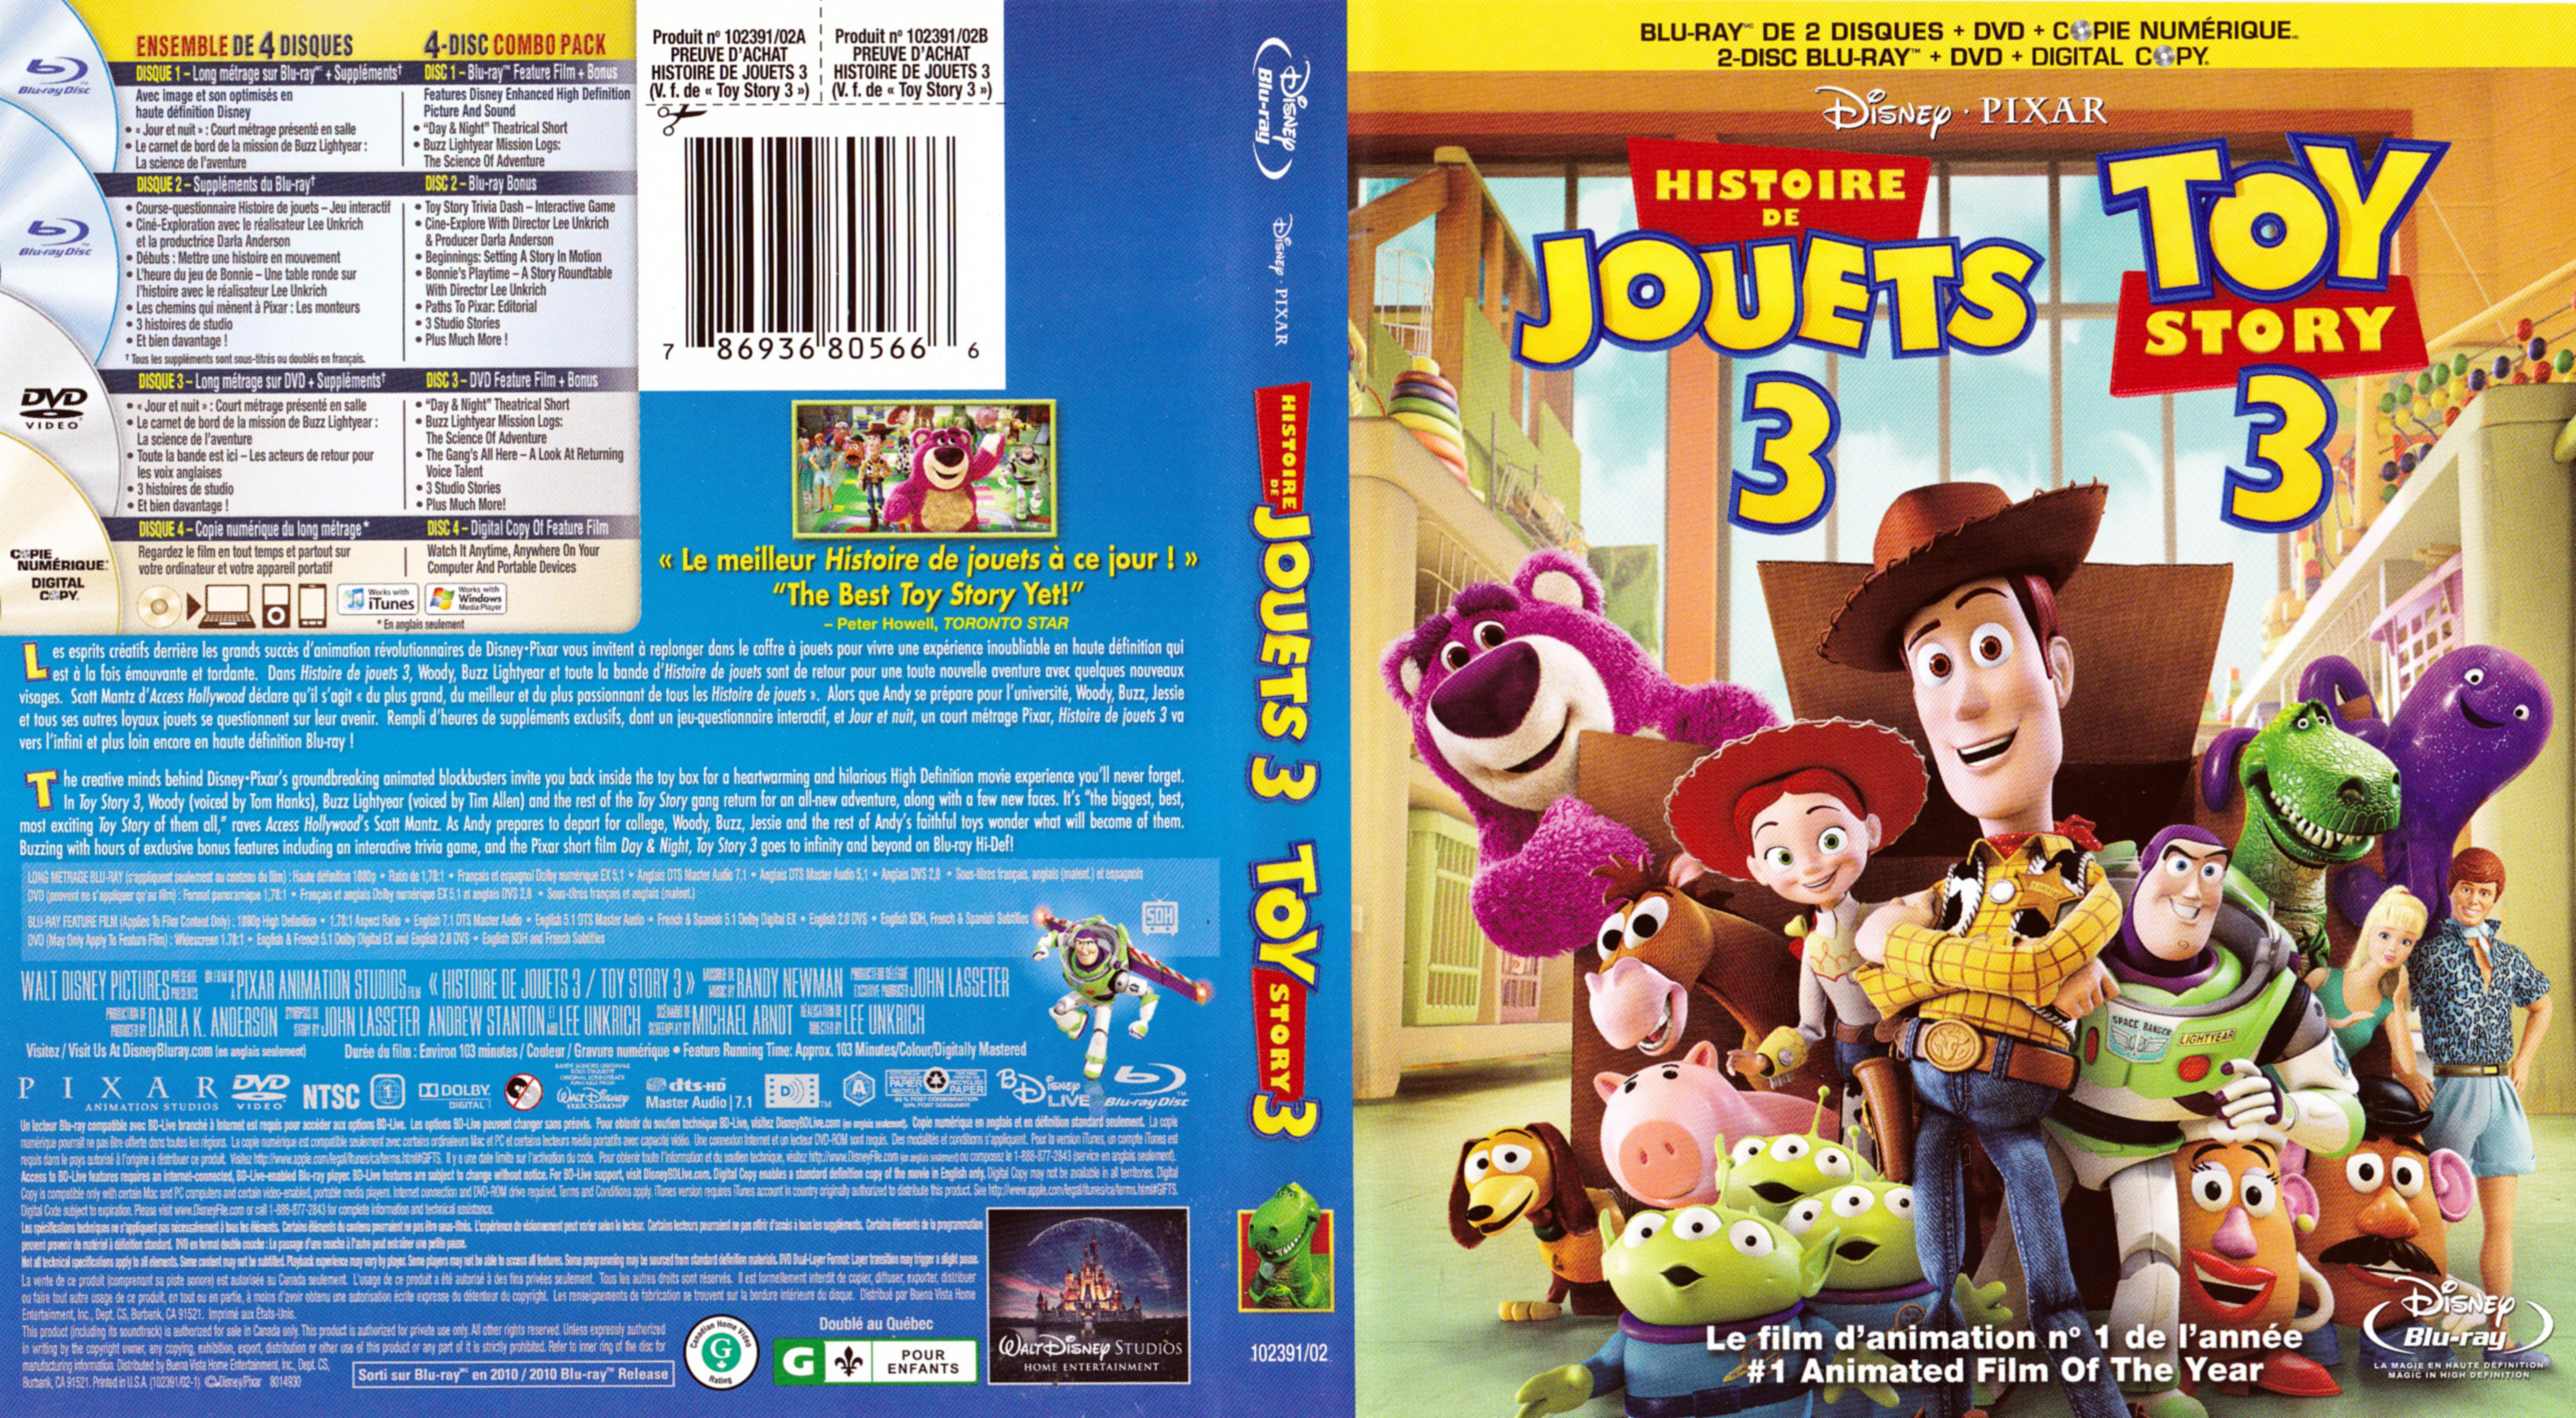 Jaquette DVD Histoire de jouet 3 - Toy story 3 (Canadienne) (BLU-RAY)